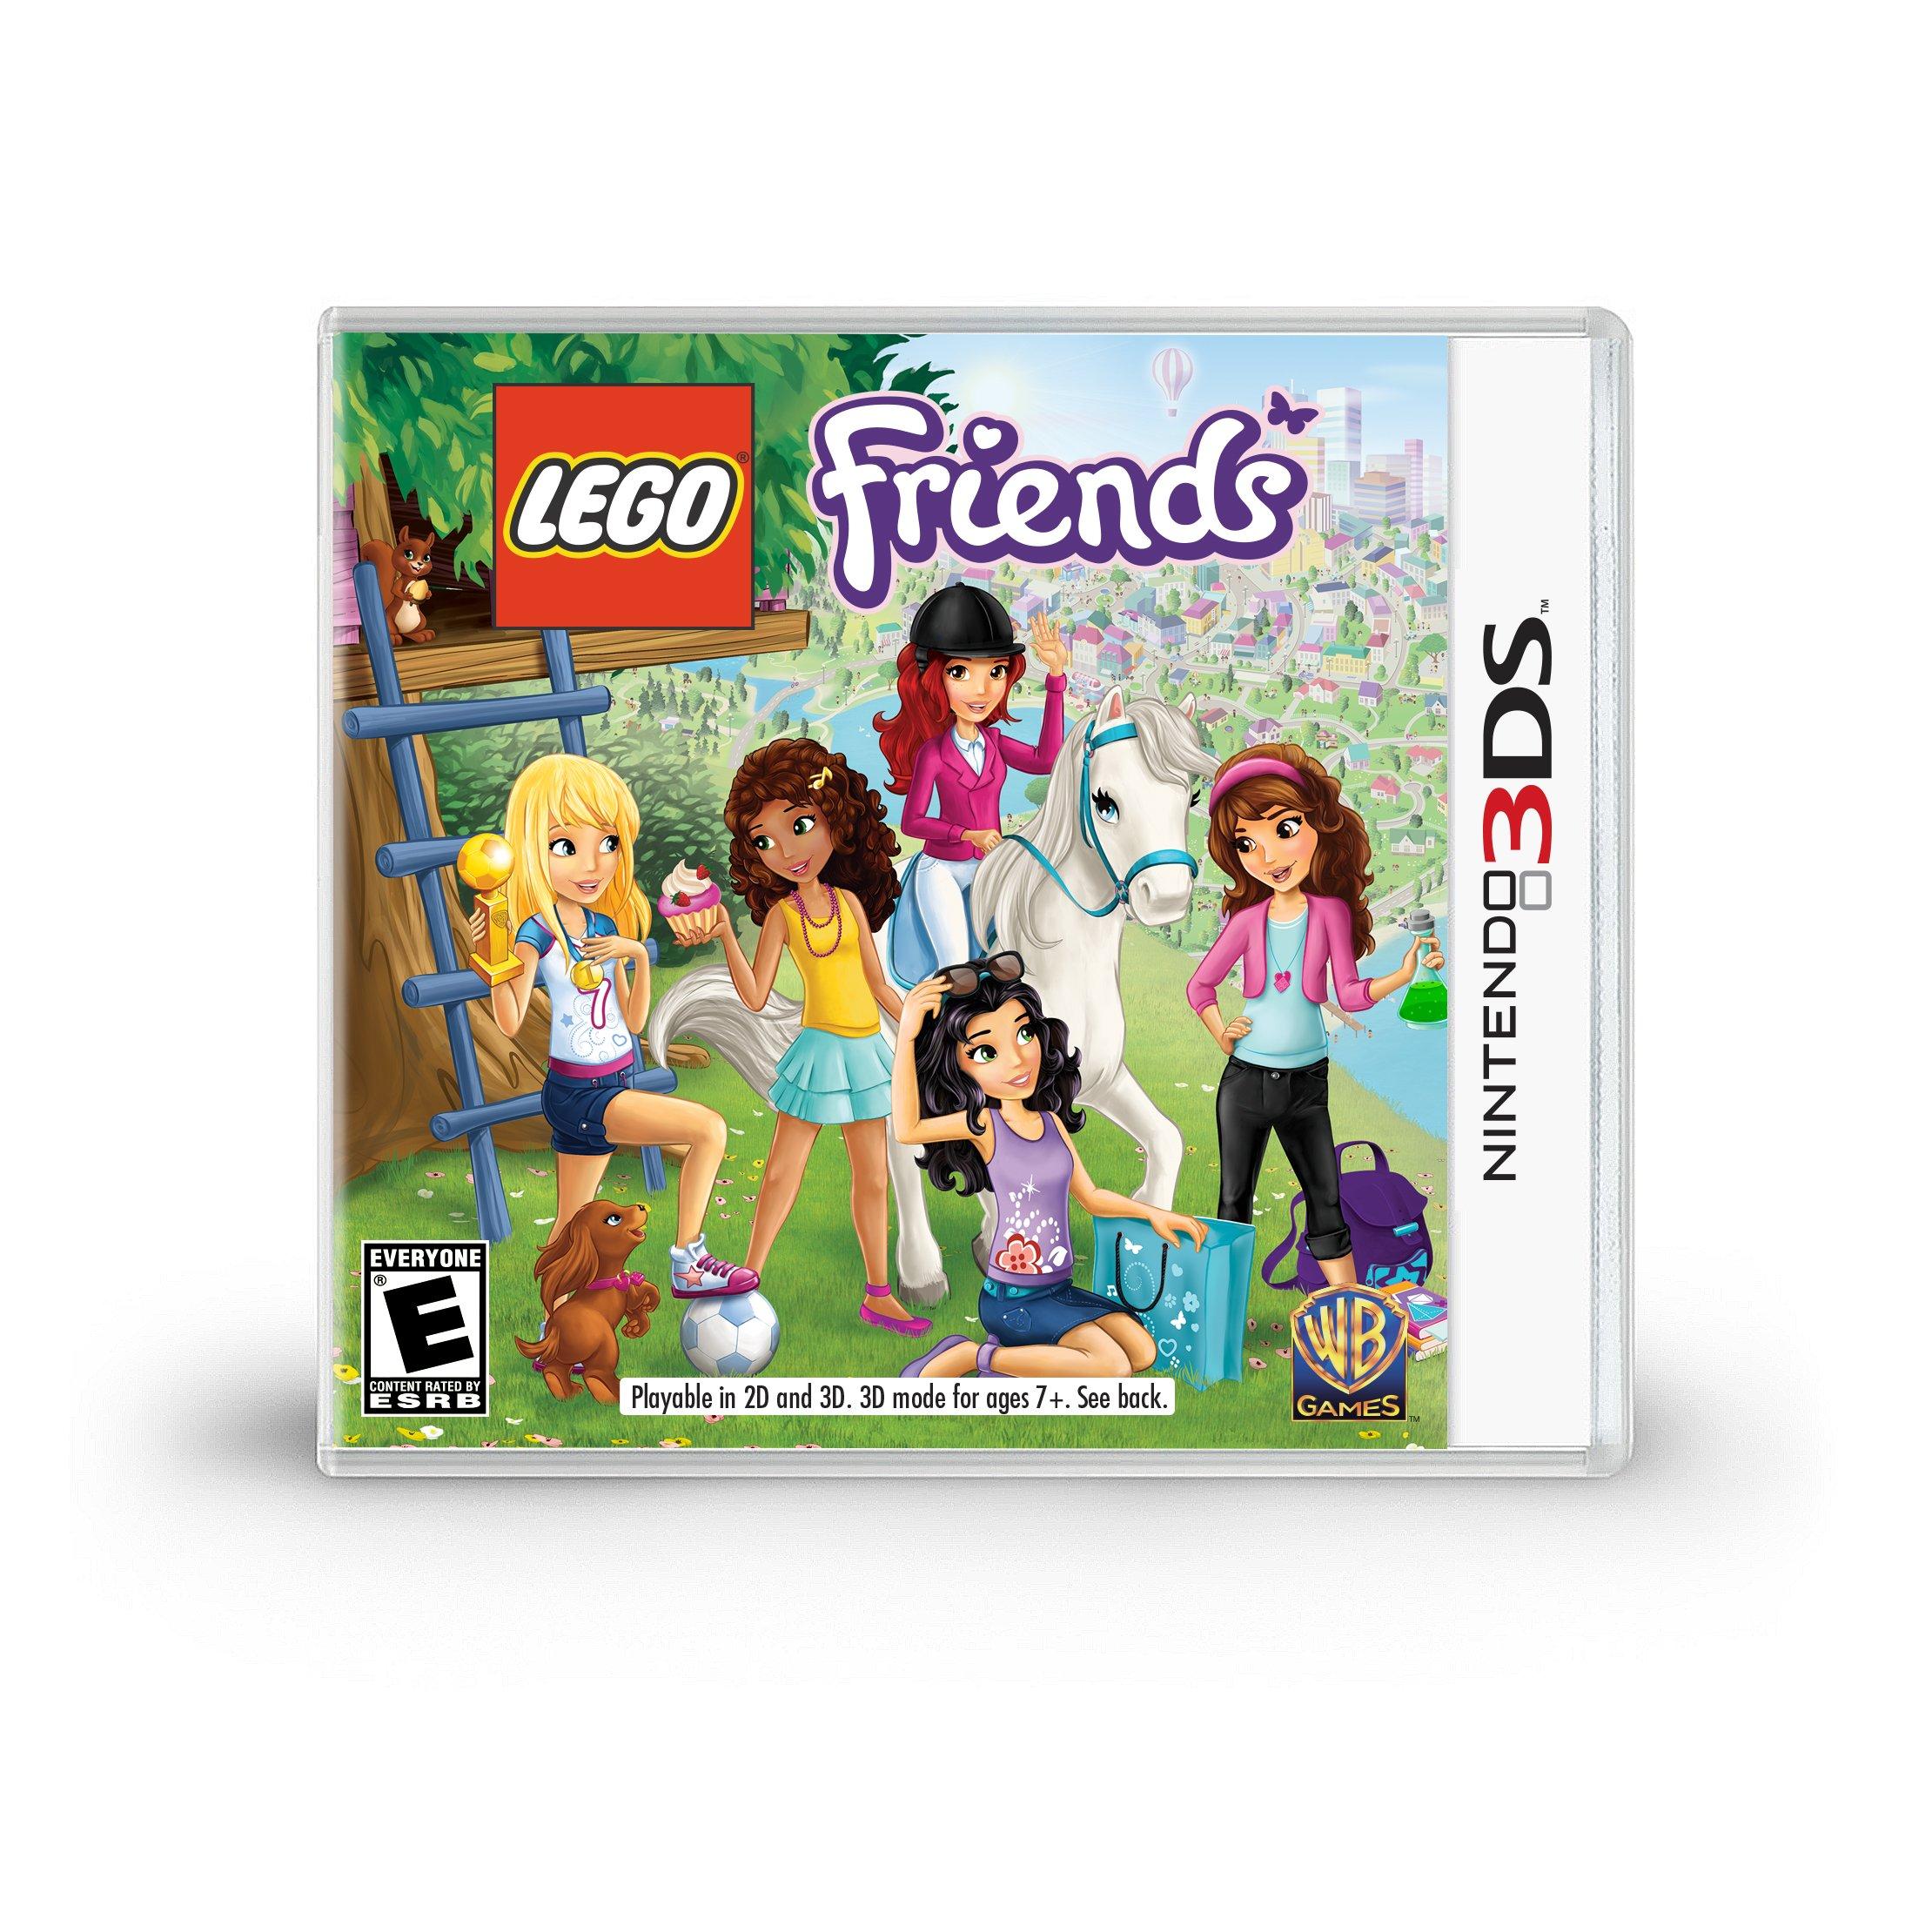 mest mus eller rotte initial LEGO Friends - Nintendo 3DS | Nintendo 3DS | GameStop